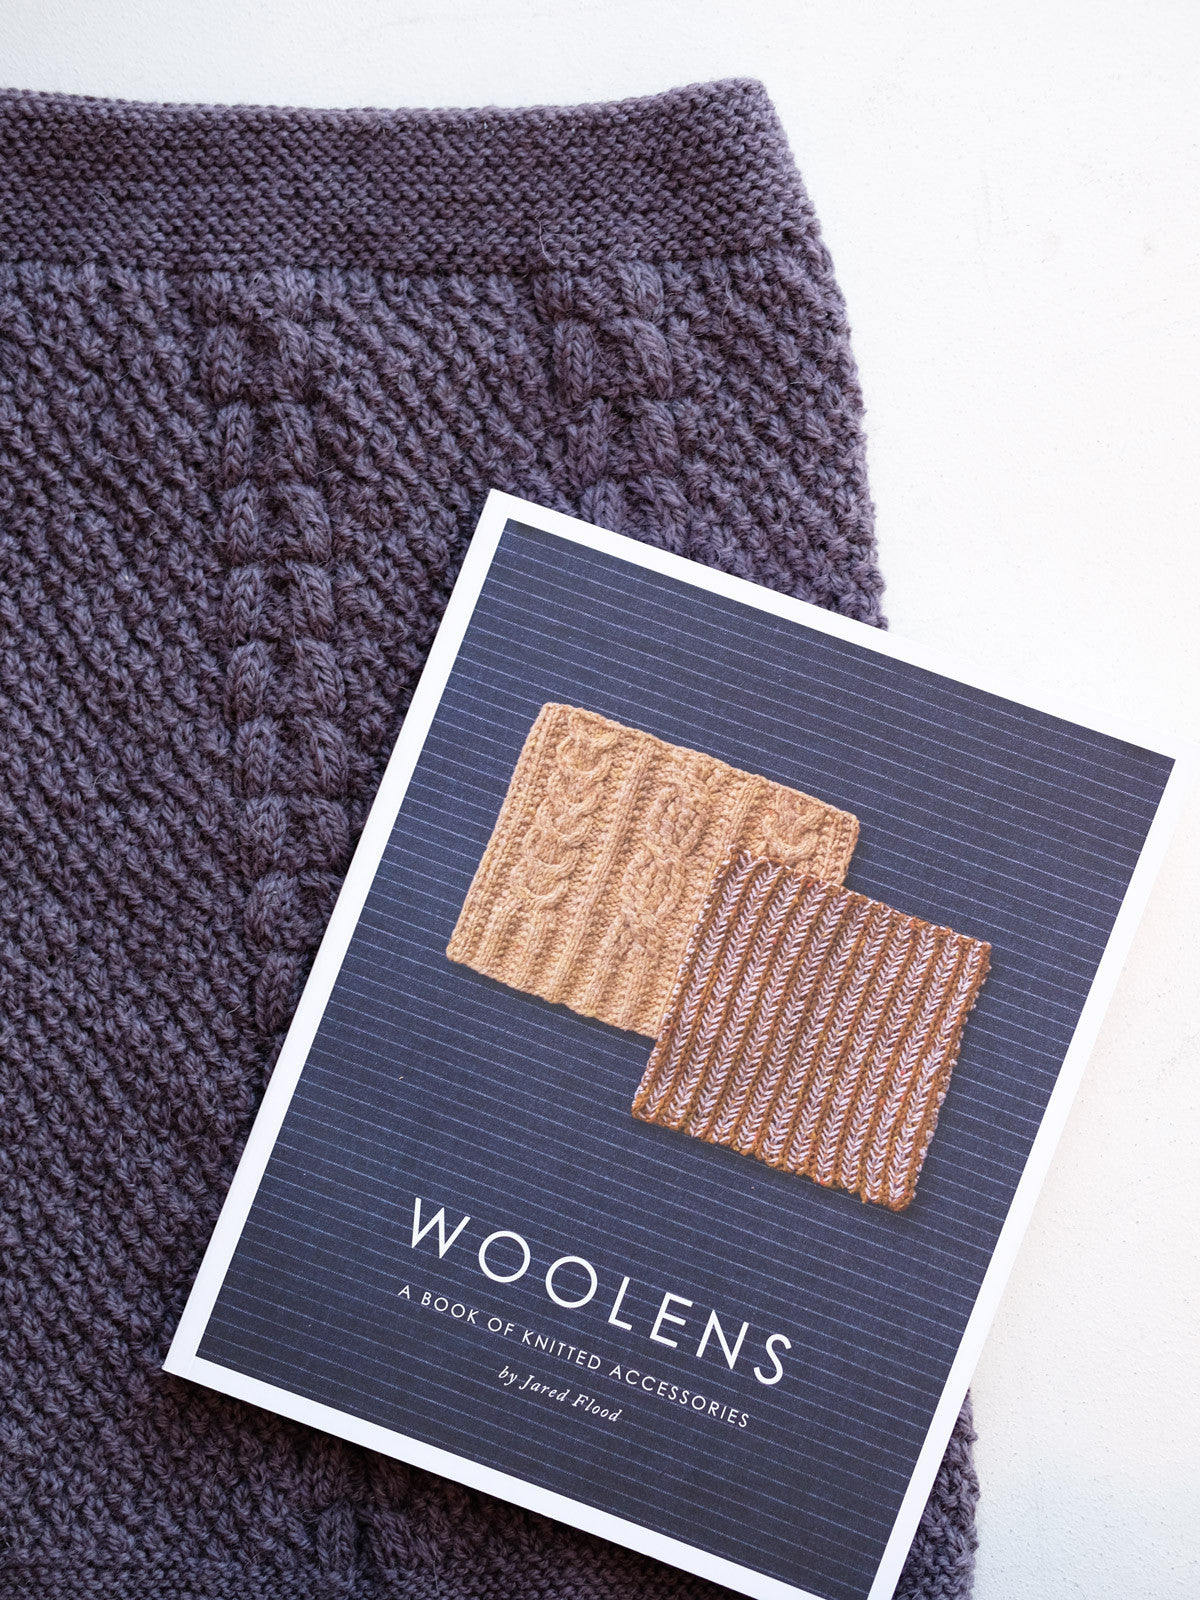 Woolens Book by Jared Flood